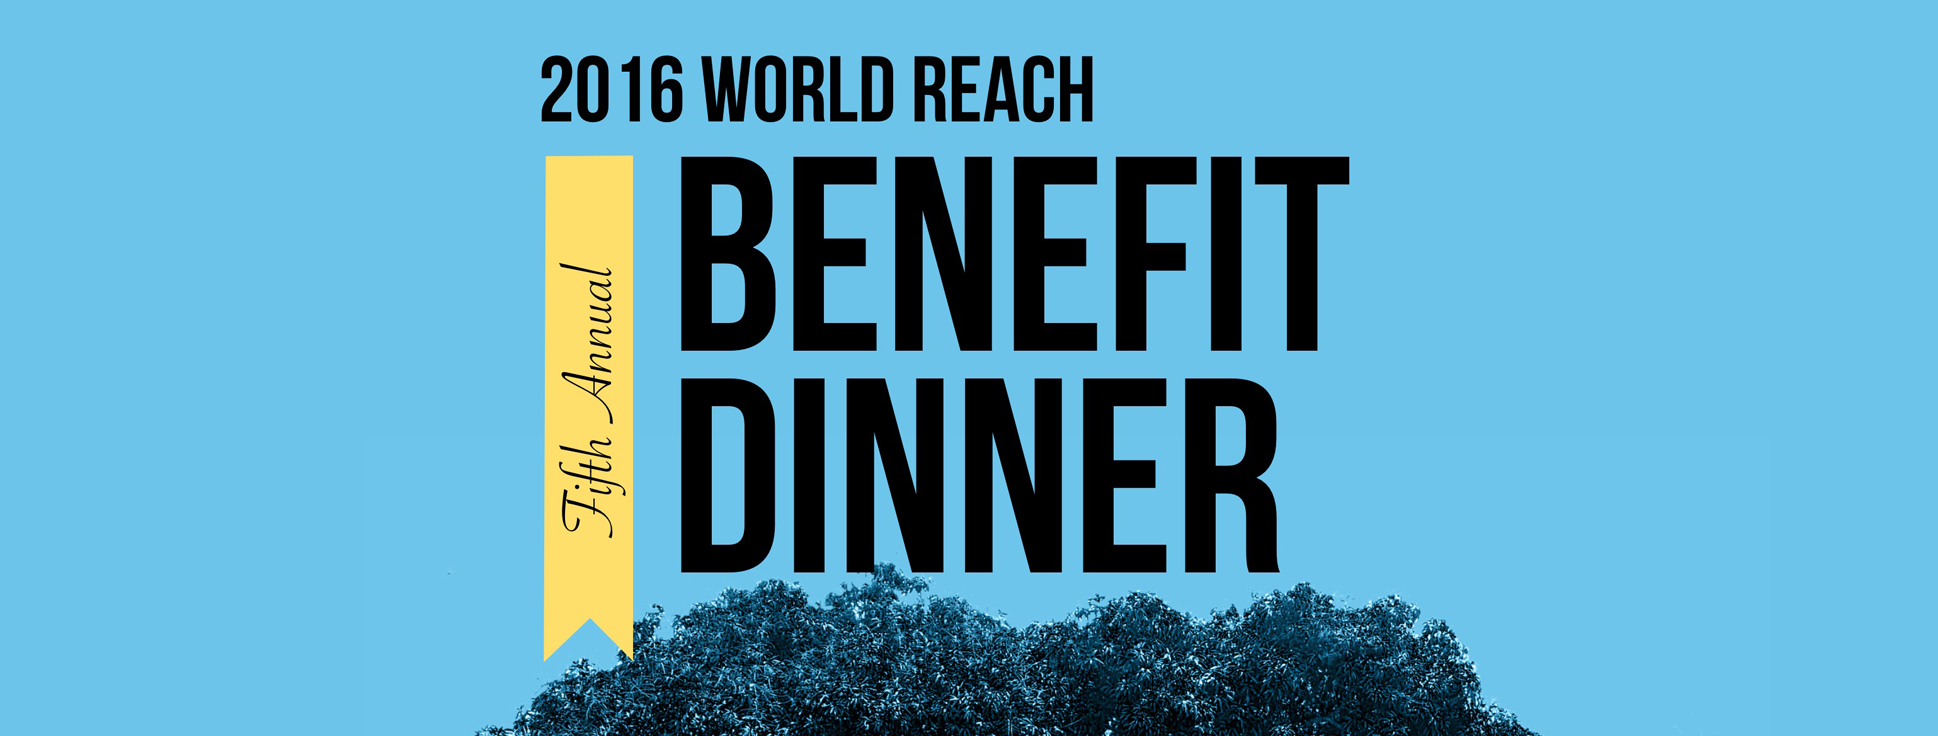 2016 World Reach Benefit Dinner